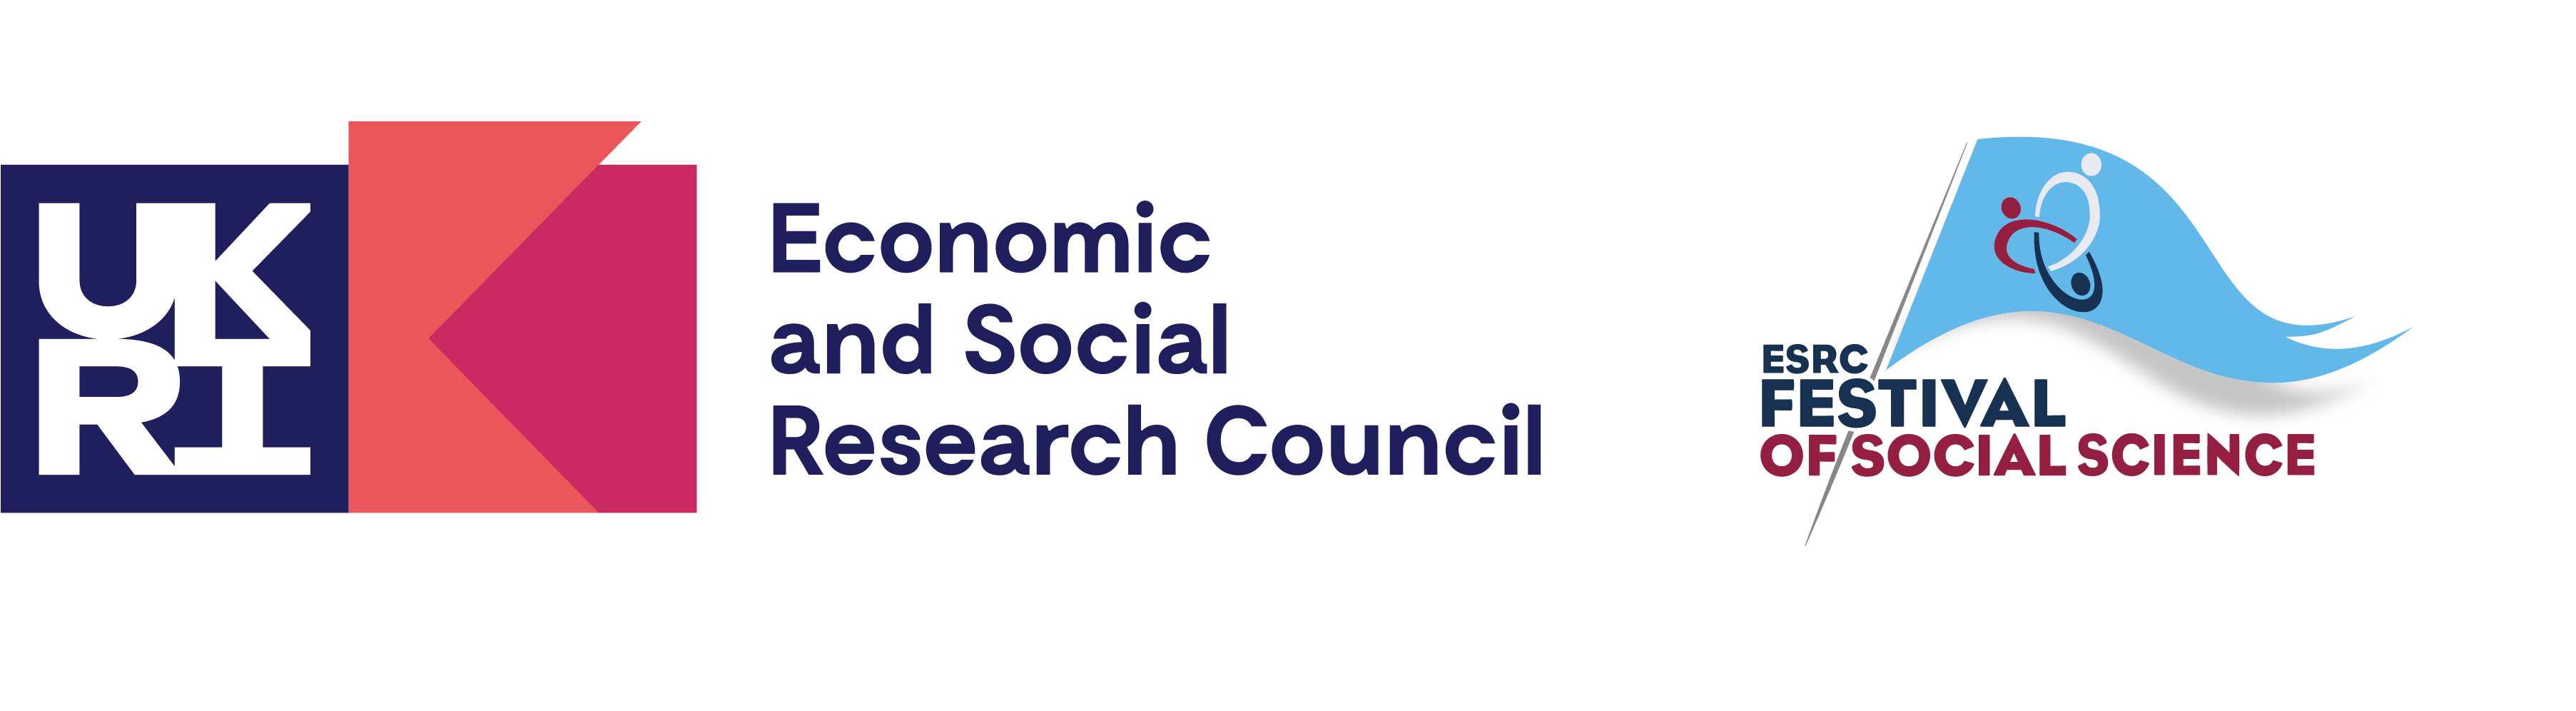 Economic Social Research Council logo